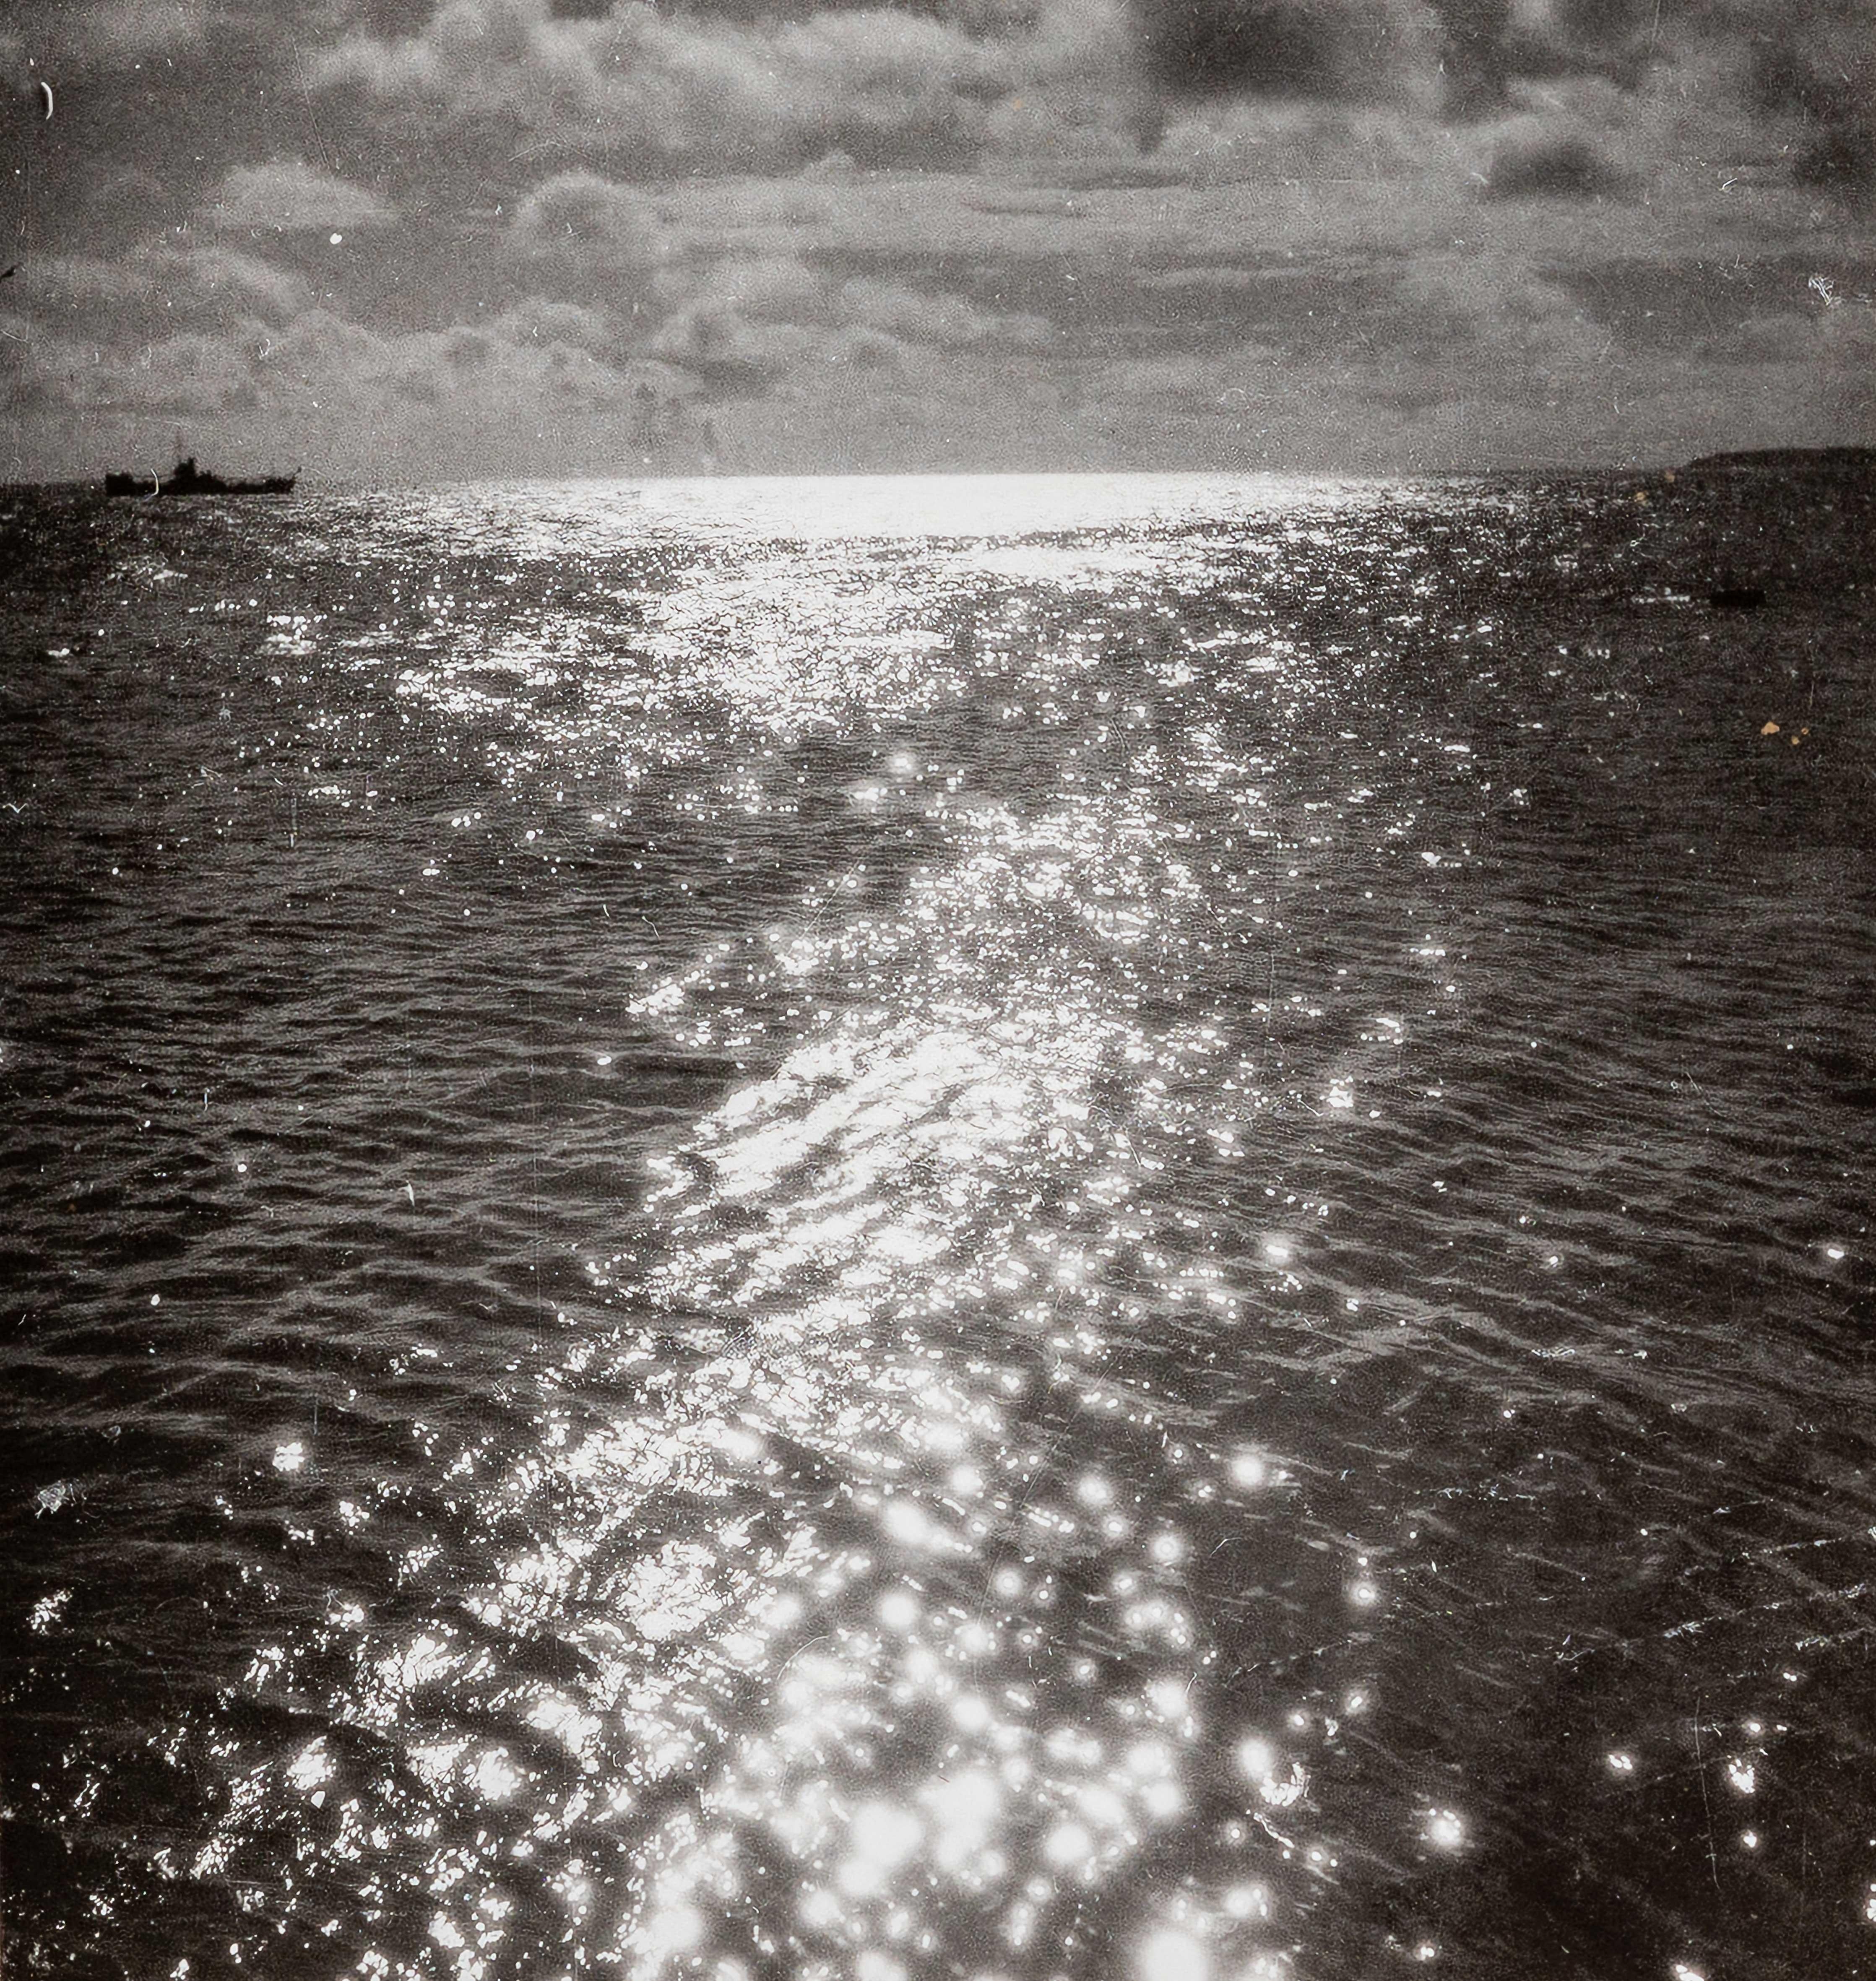 Dora Maar Black and White Photograph - Sea [Reflections], (Marines [Reflets]) III